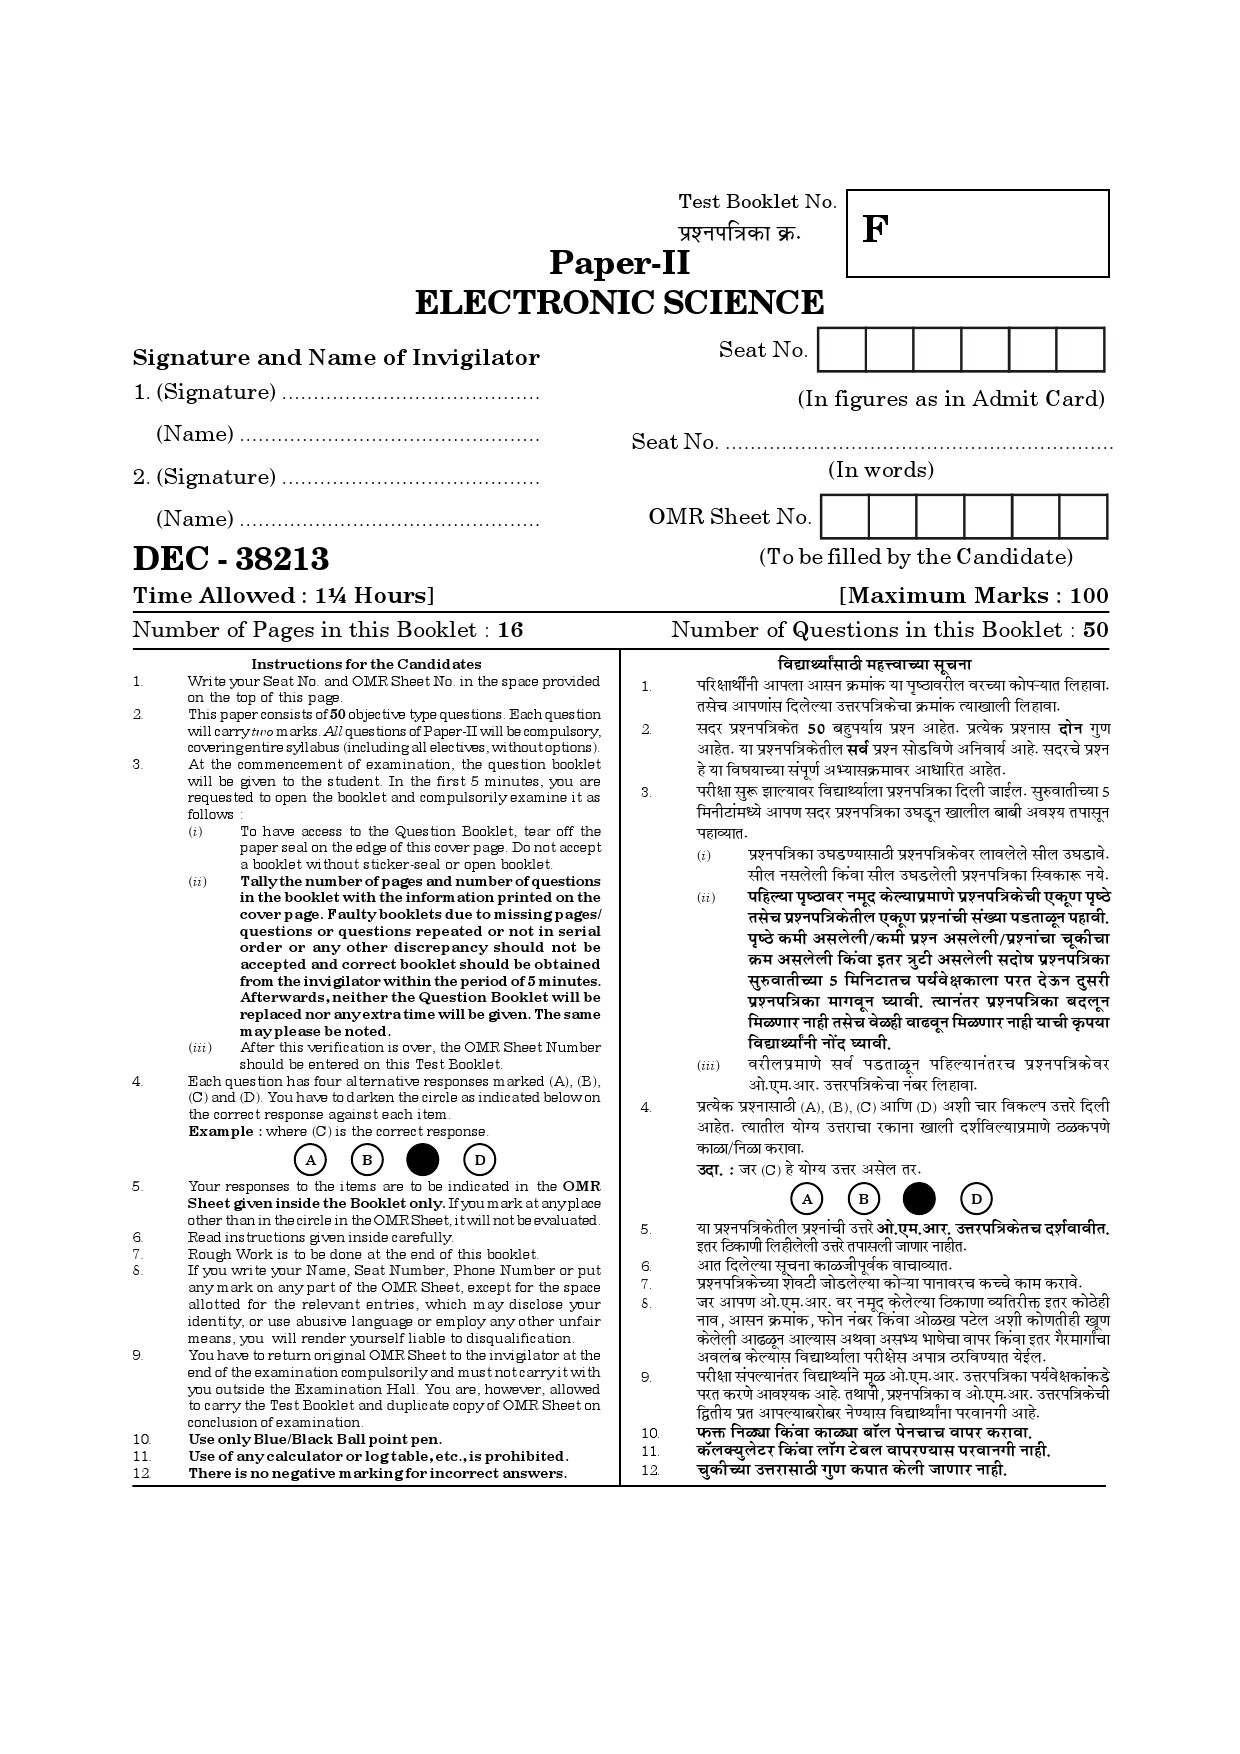 Maharashtra SET Electronics Science Question Paper II December 2013 1